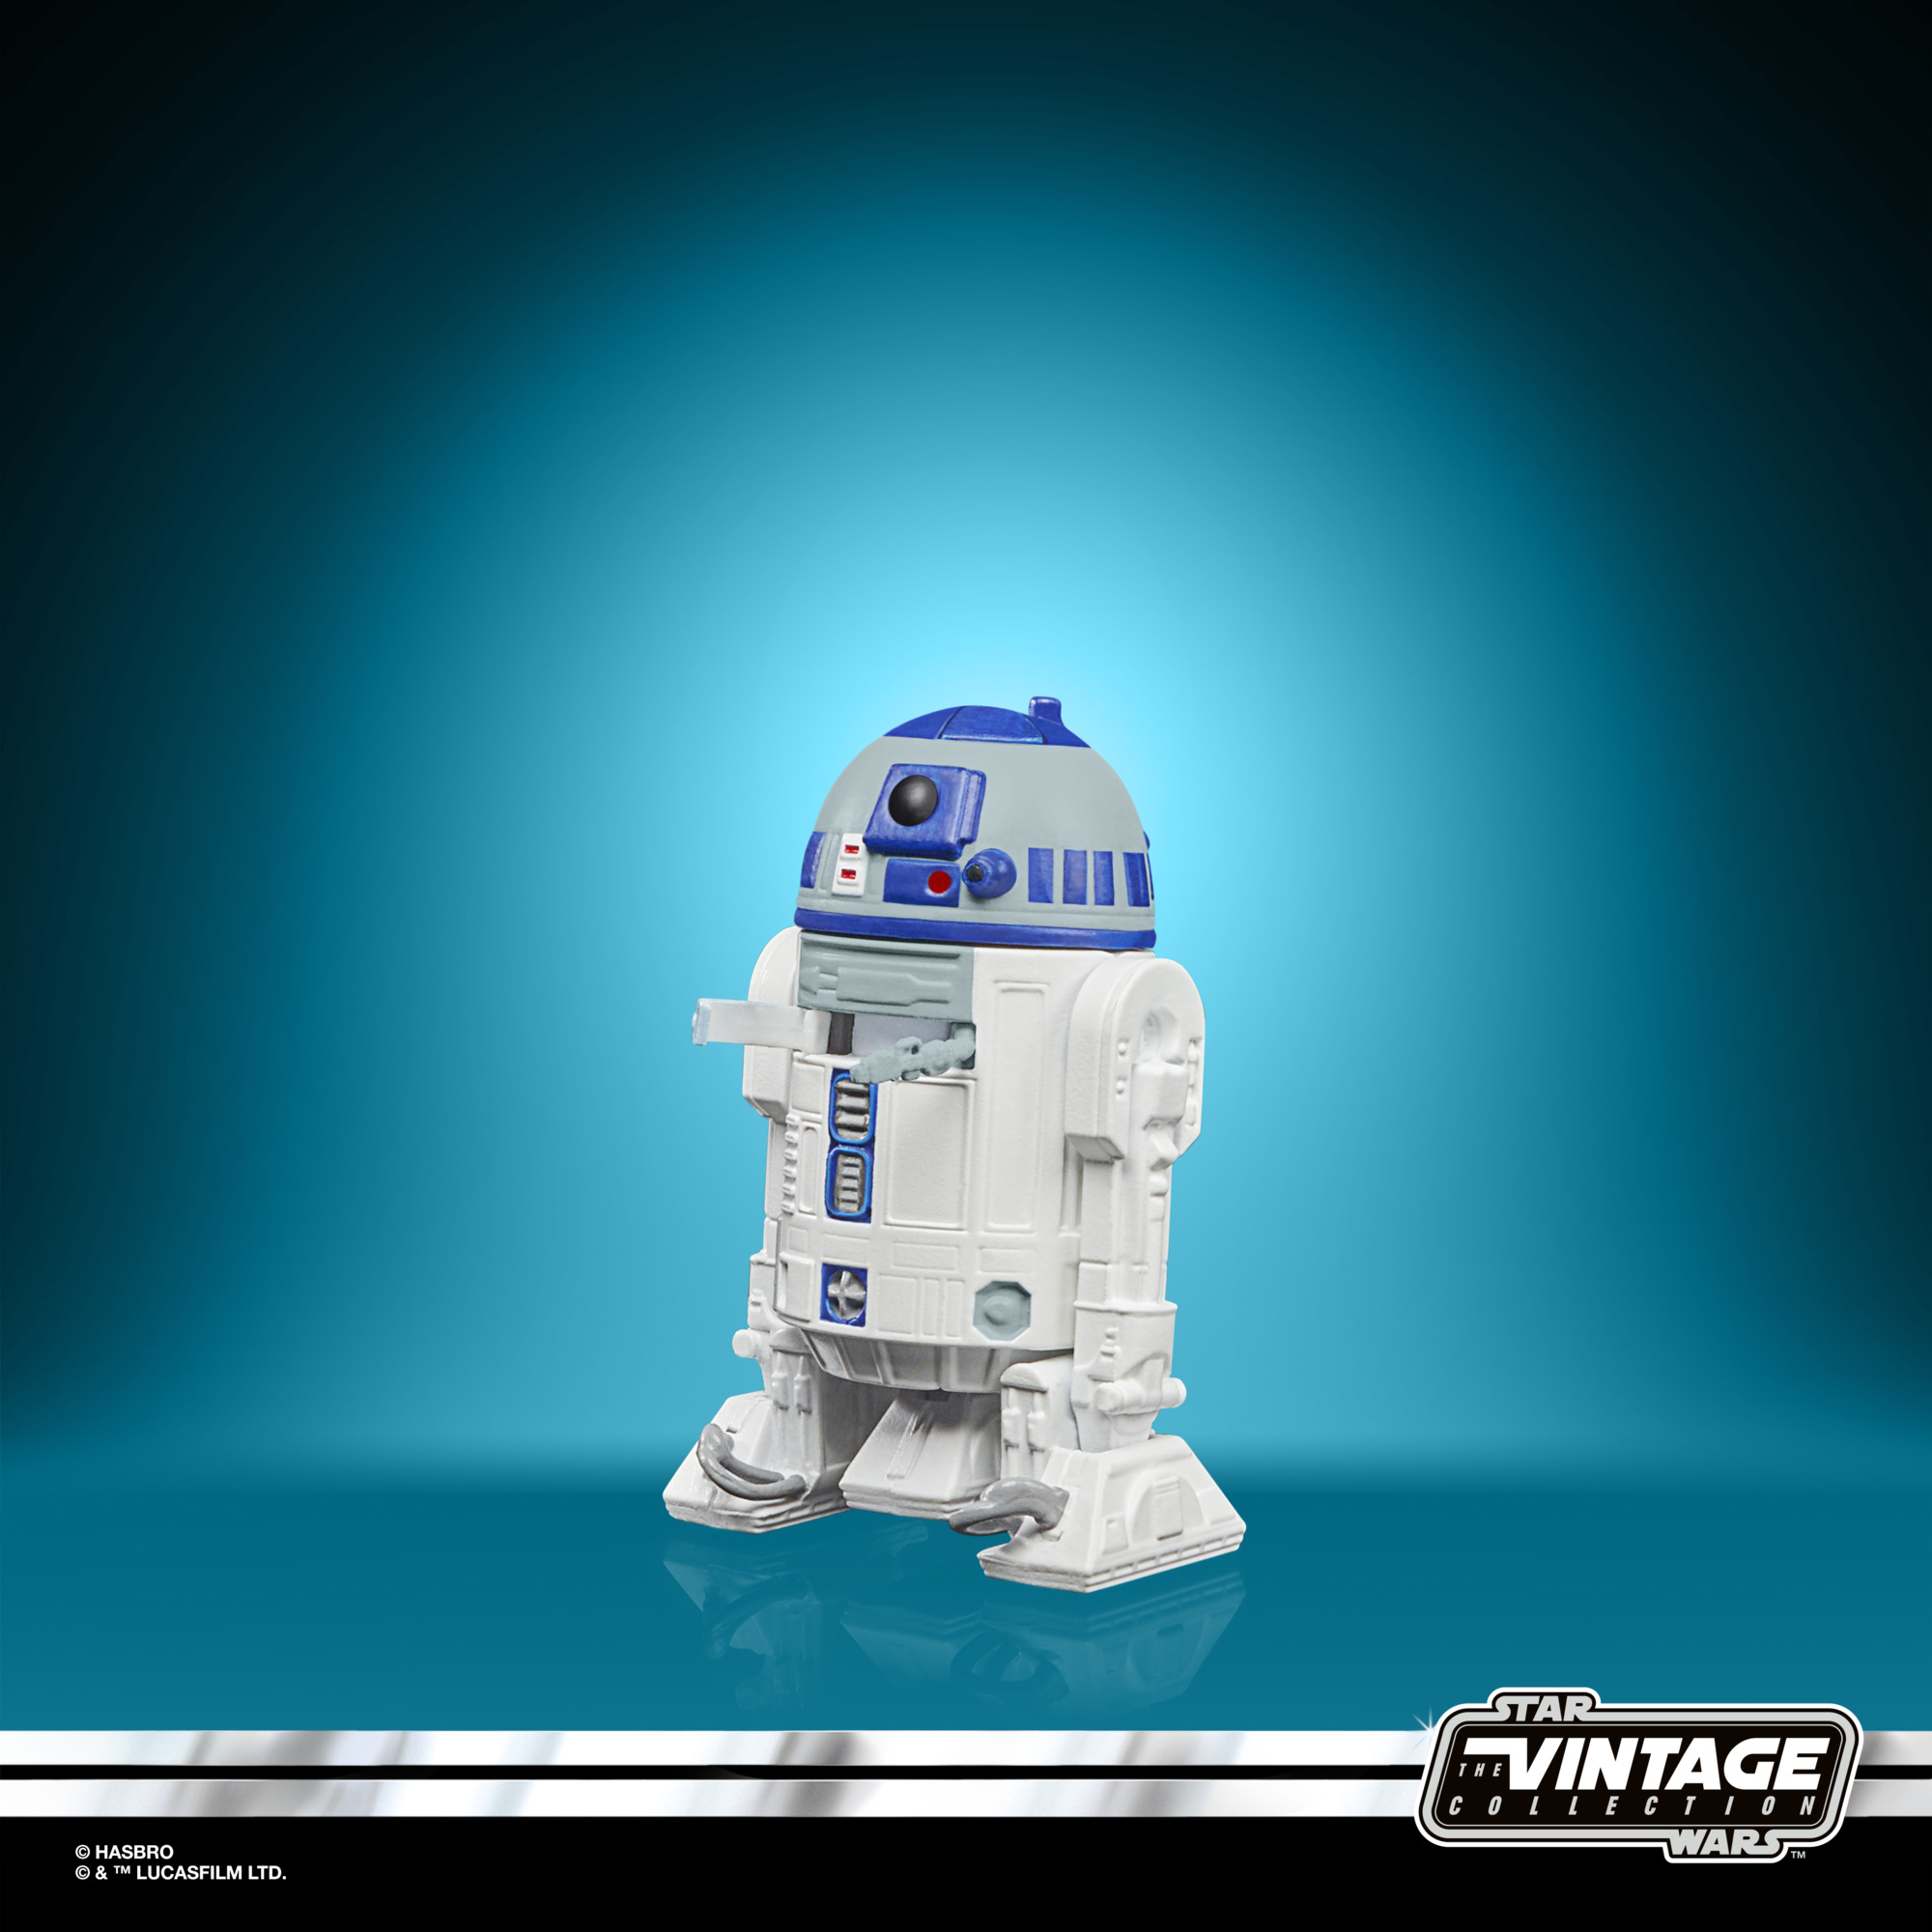 VP leicht beschädigt!!! Star Wars: Droids Vintage Collection Actionfigur 2021 Artoo-Detoo (R2-D2) 10 cm F53105L00 5010993954407